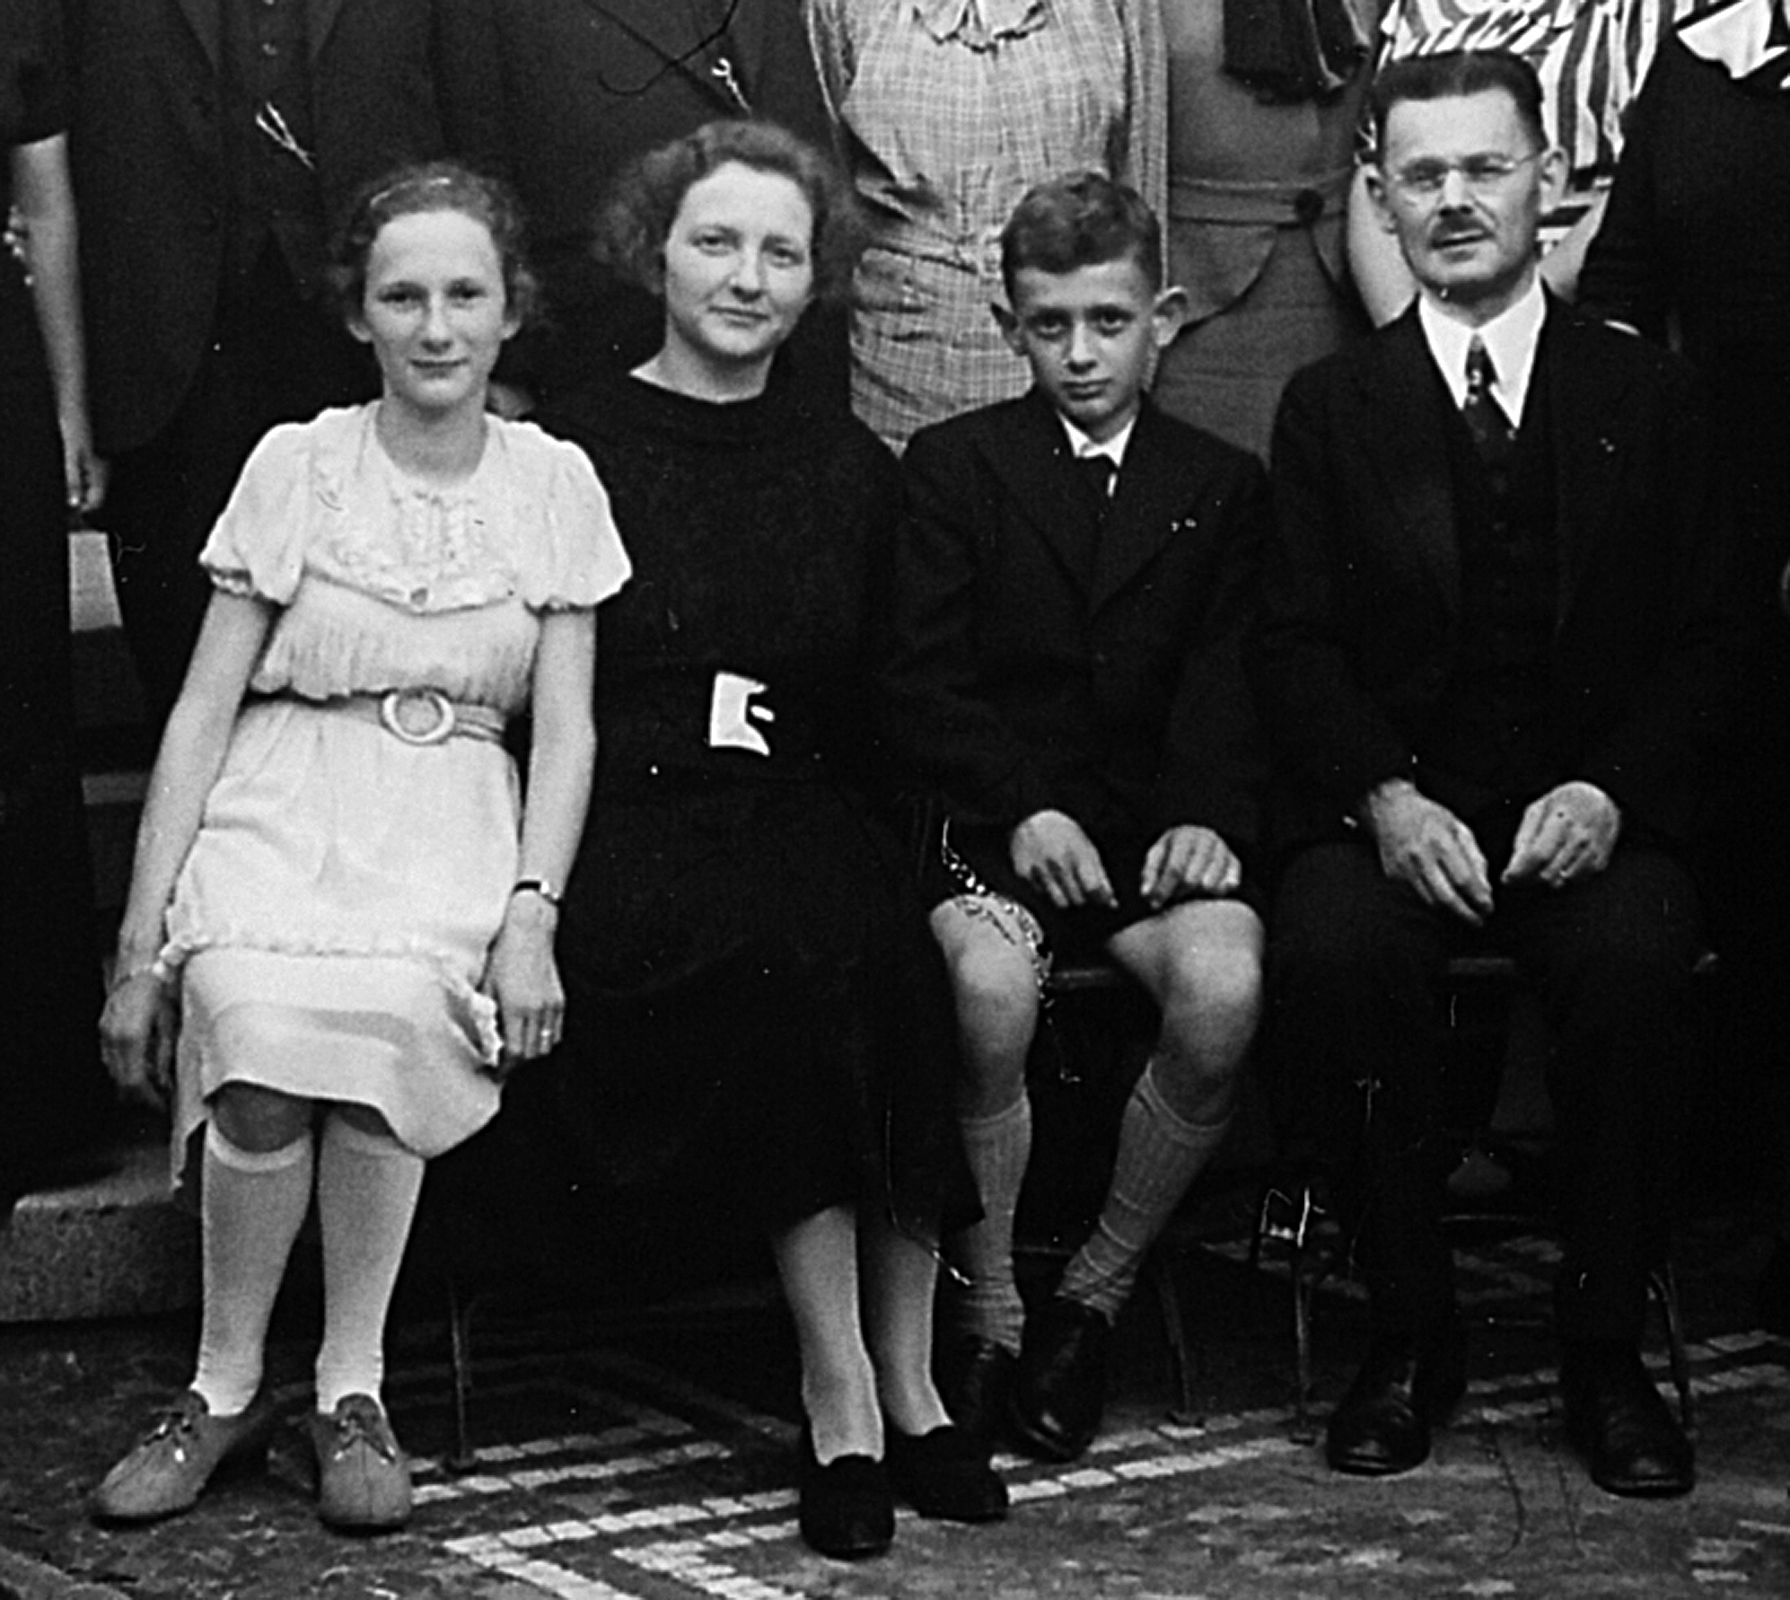 The Bernheim family in 1937 on the occasion of Doris' Bat Mitzvah and Hans Bernheim's Bar Mitzvah.